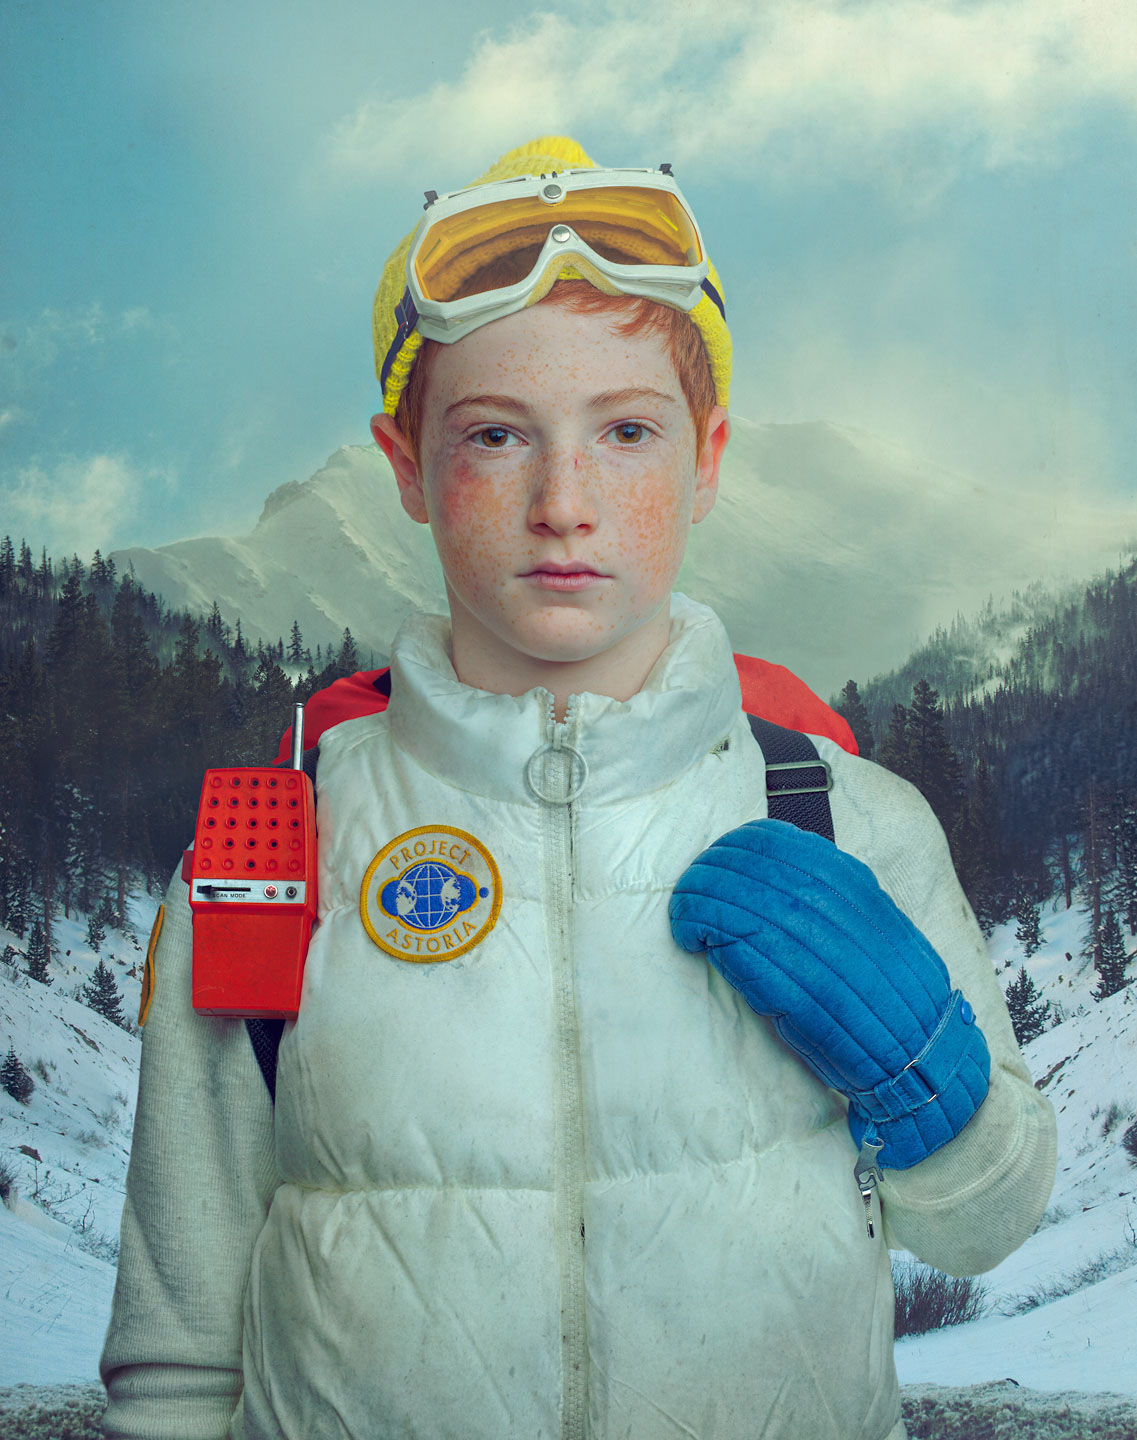 Boy in winter uniform 1 - Project Astoria: Test 01 - Art by Todd Baxter